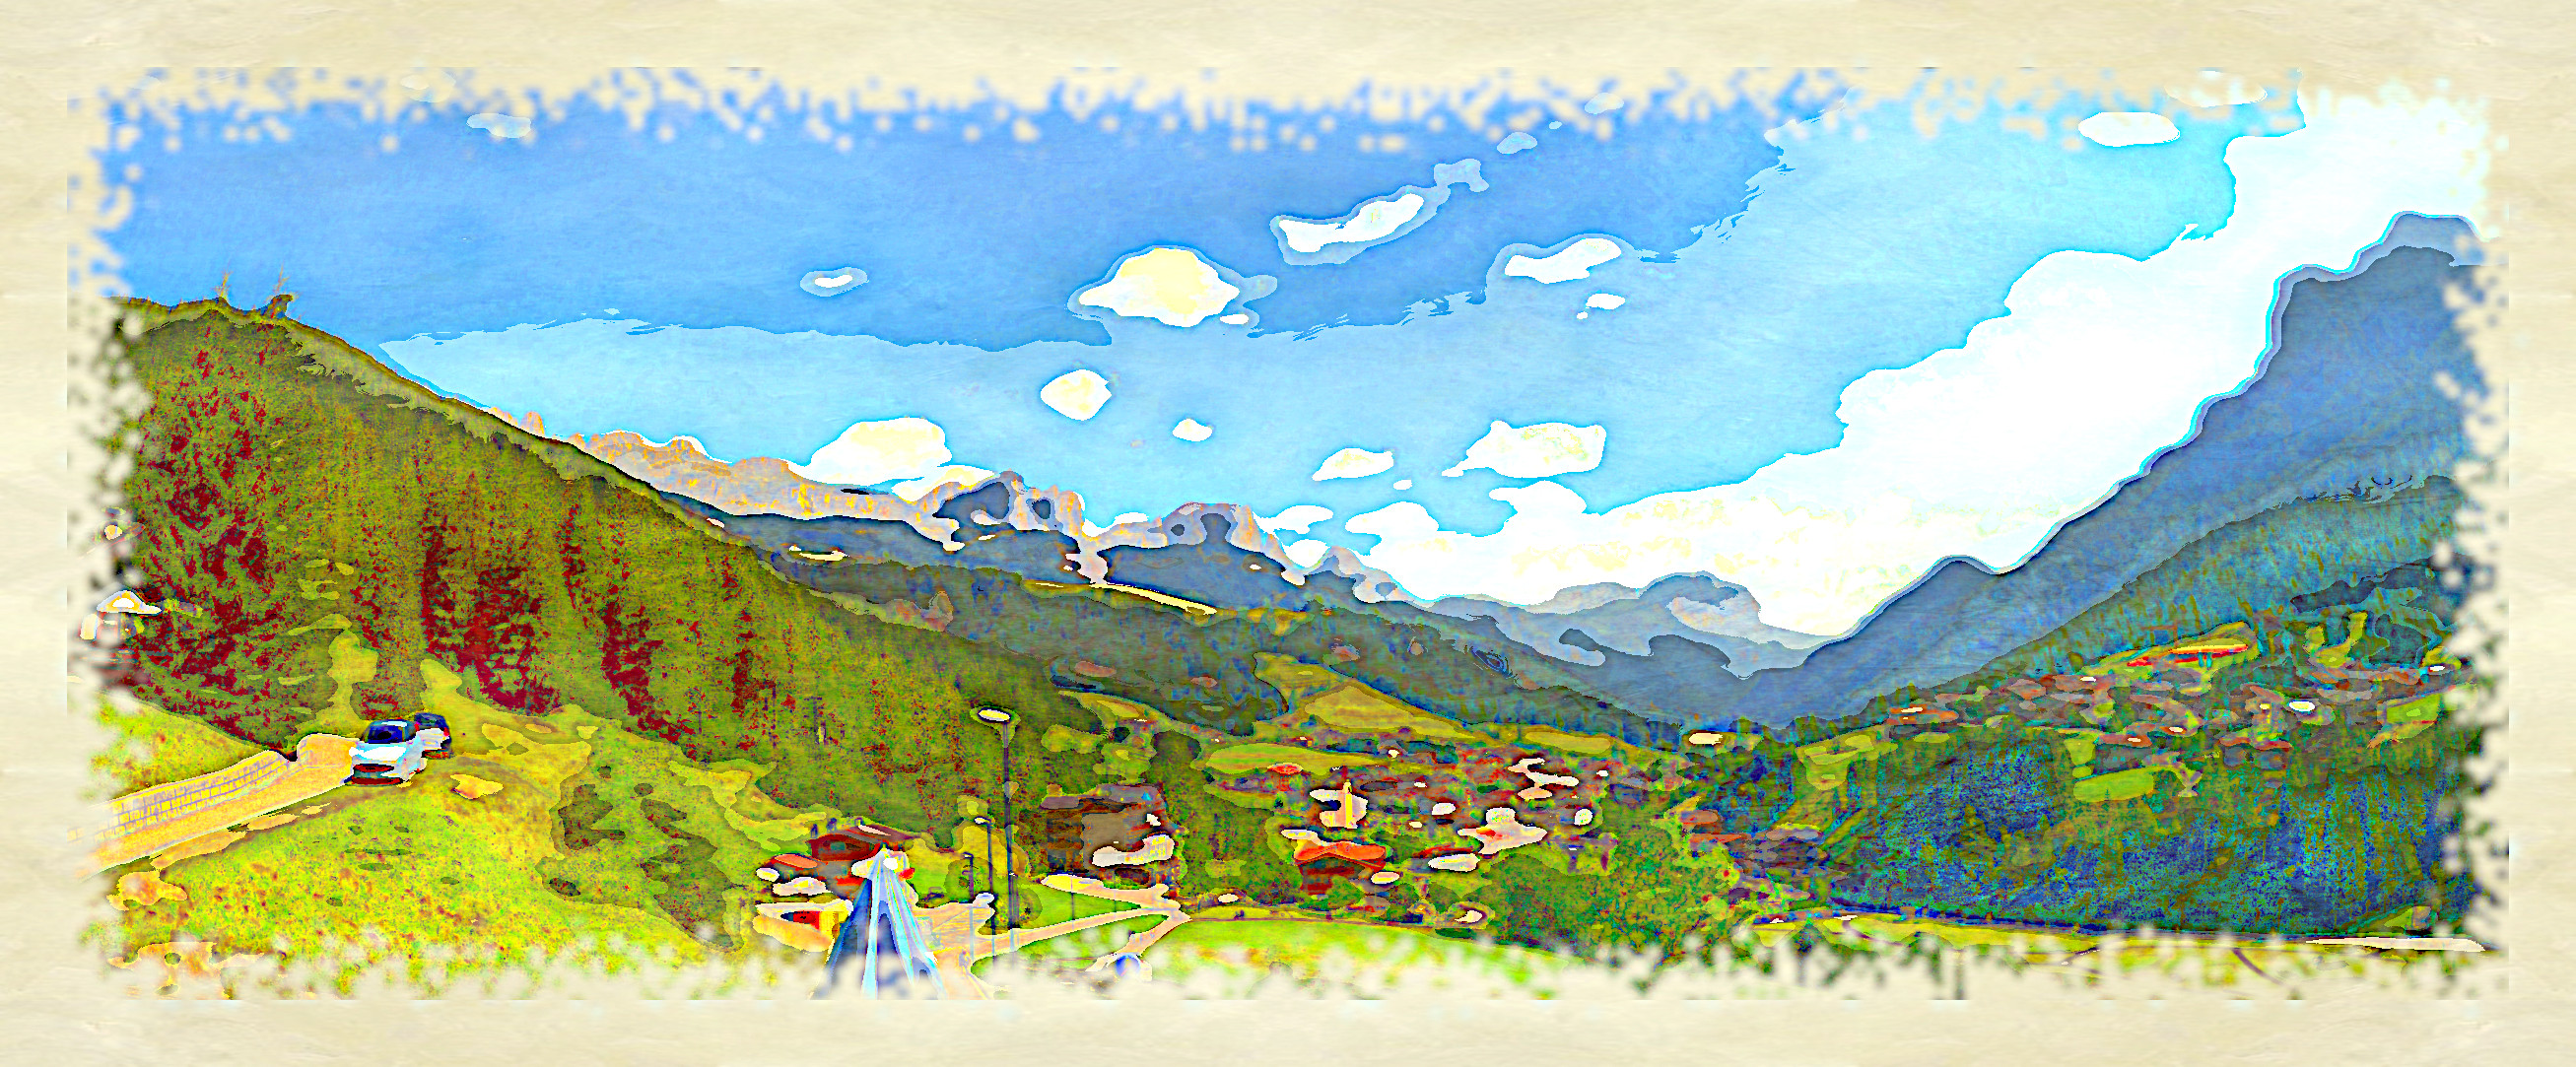 2019-04-01 10-18-50 Dolomiti_2012_Samsung_2012-07-08_SAM_0303_stitch as a simple aquarel, using 16 colours.jpg